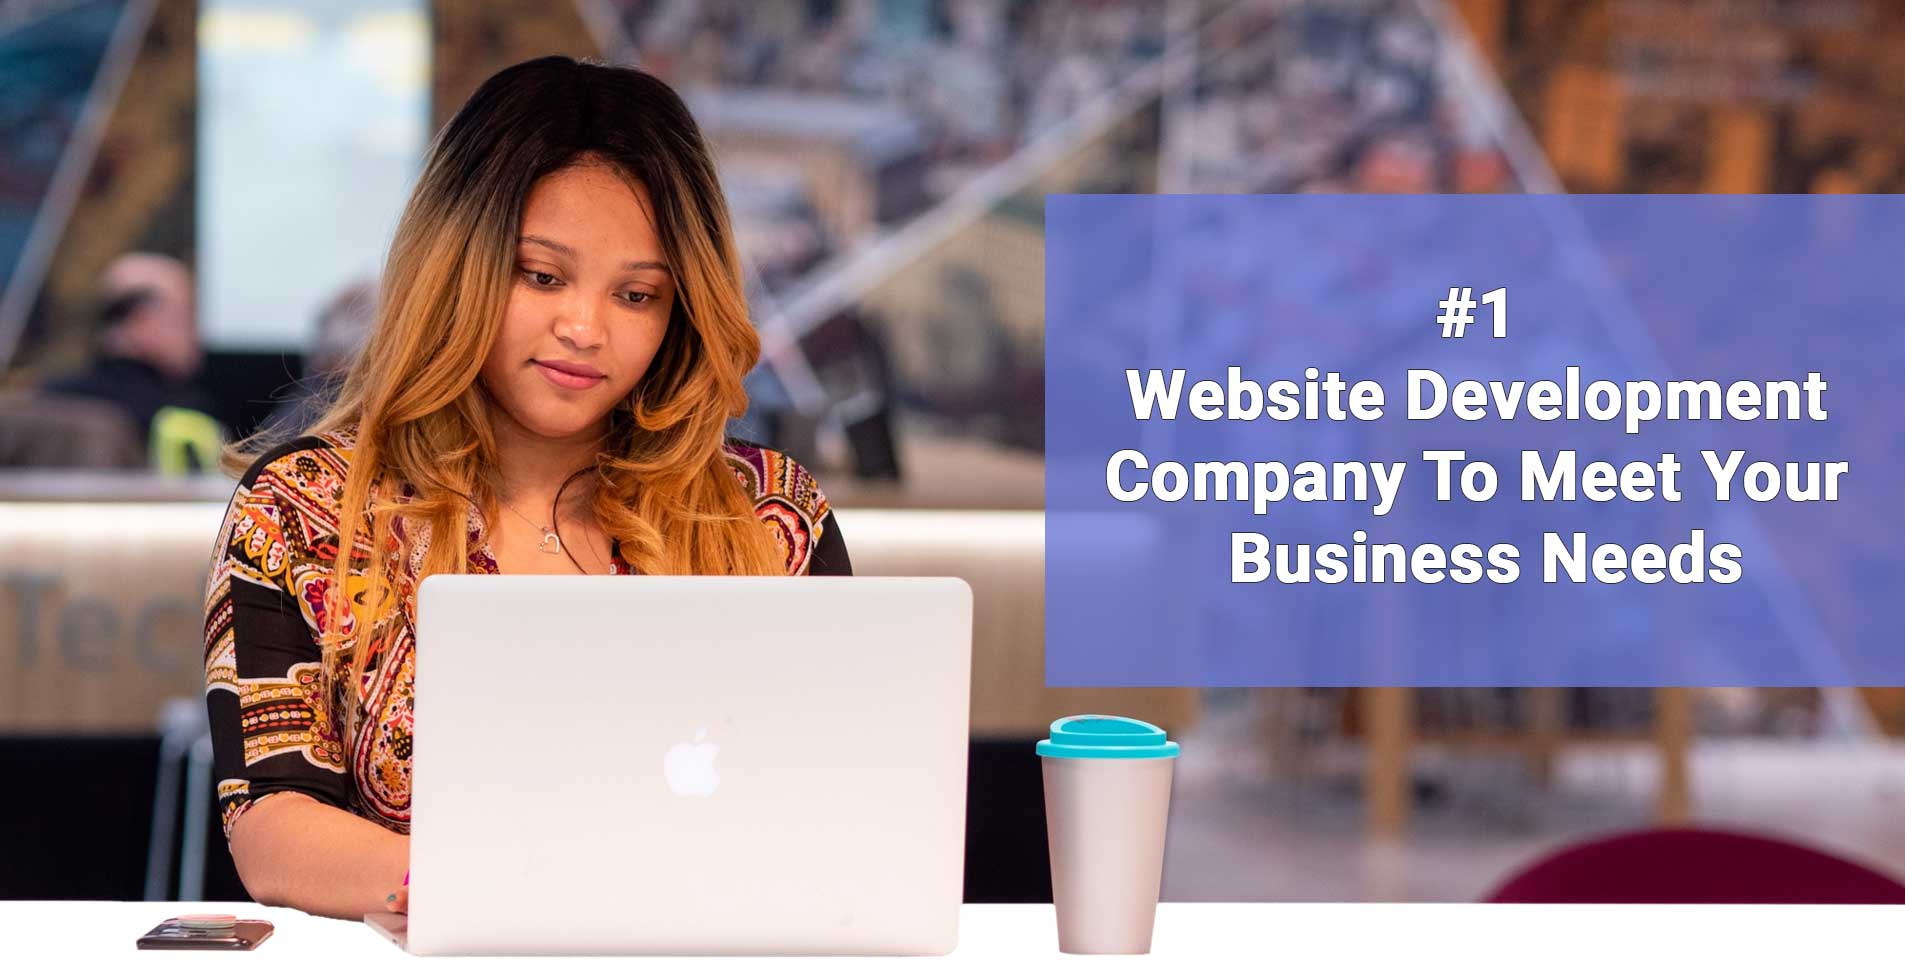 Website Design and Development Services Company